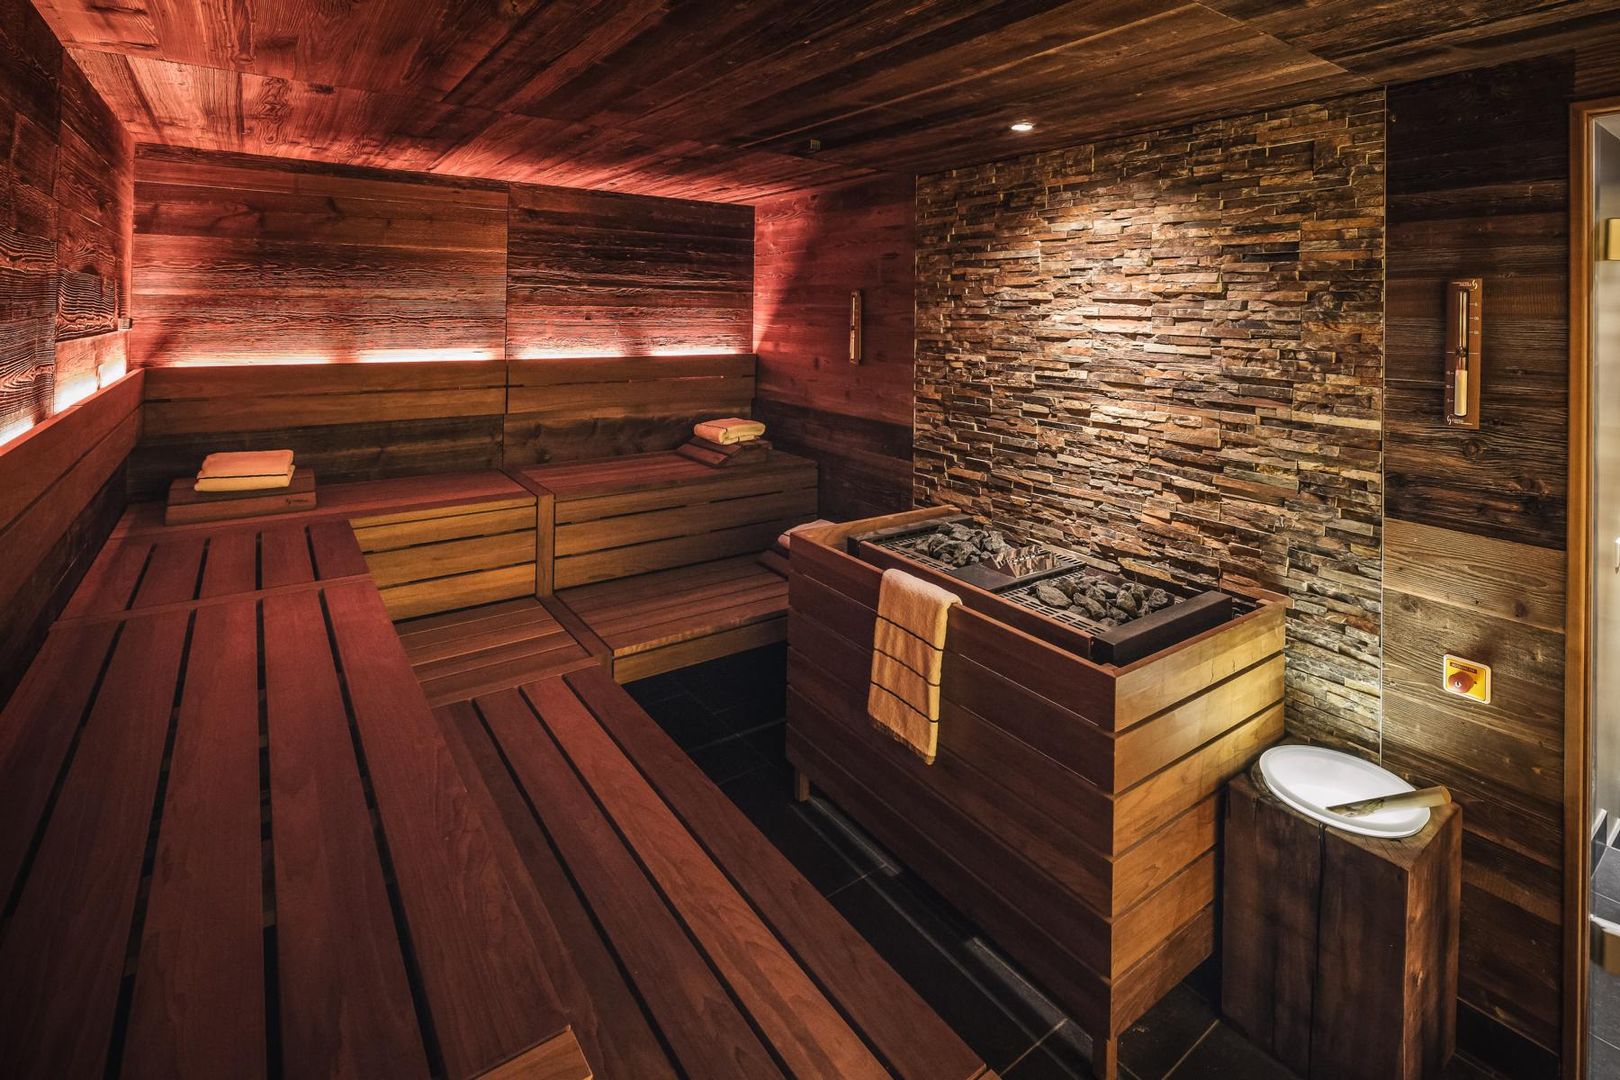 Referenz Nr. 3, corso sauna manufaktur gmbh corso sauna manufaktur gmbh 商業空間 石 ホテル